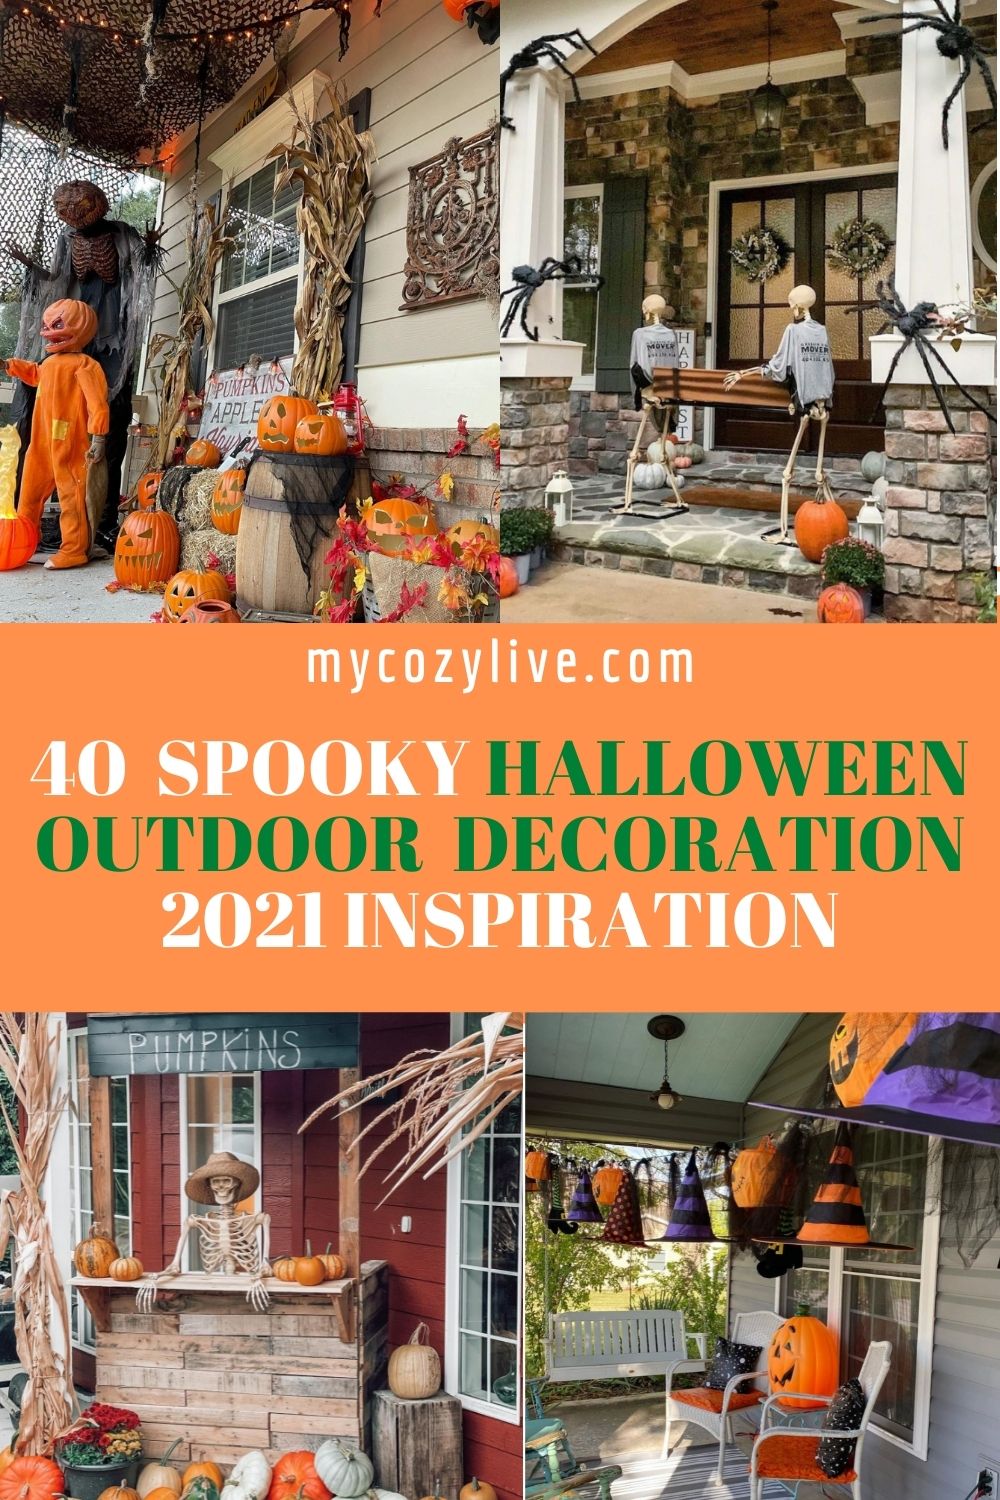 Spooky Halloween Outside Decorations ideas 2021